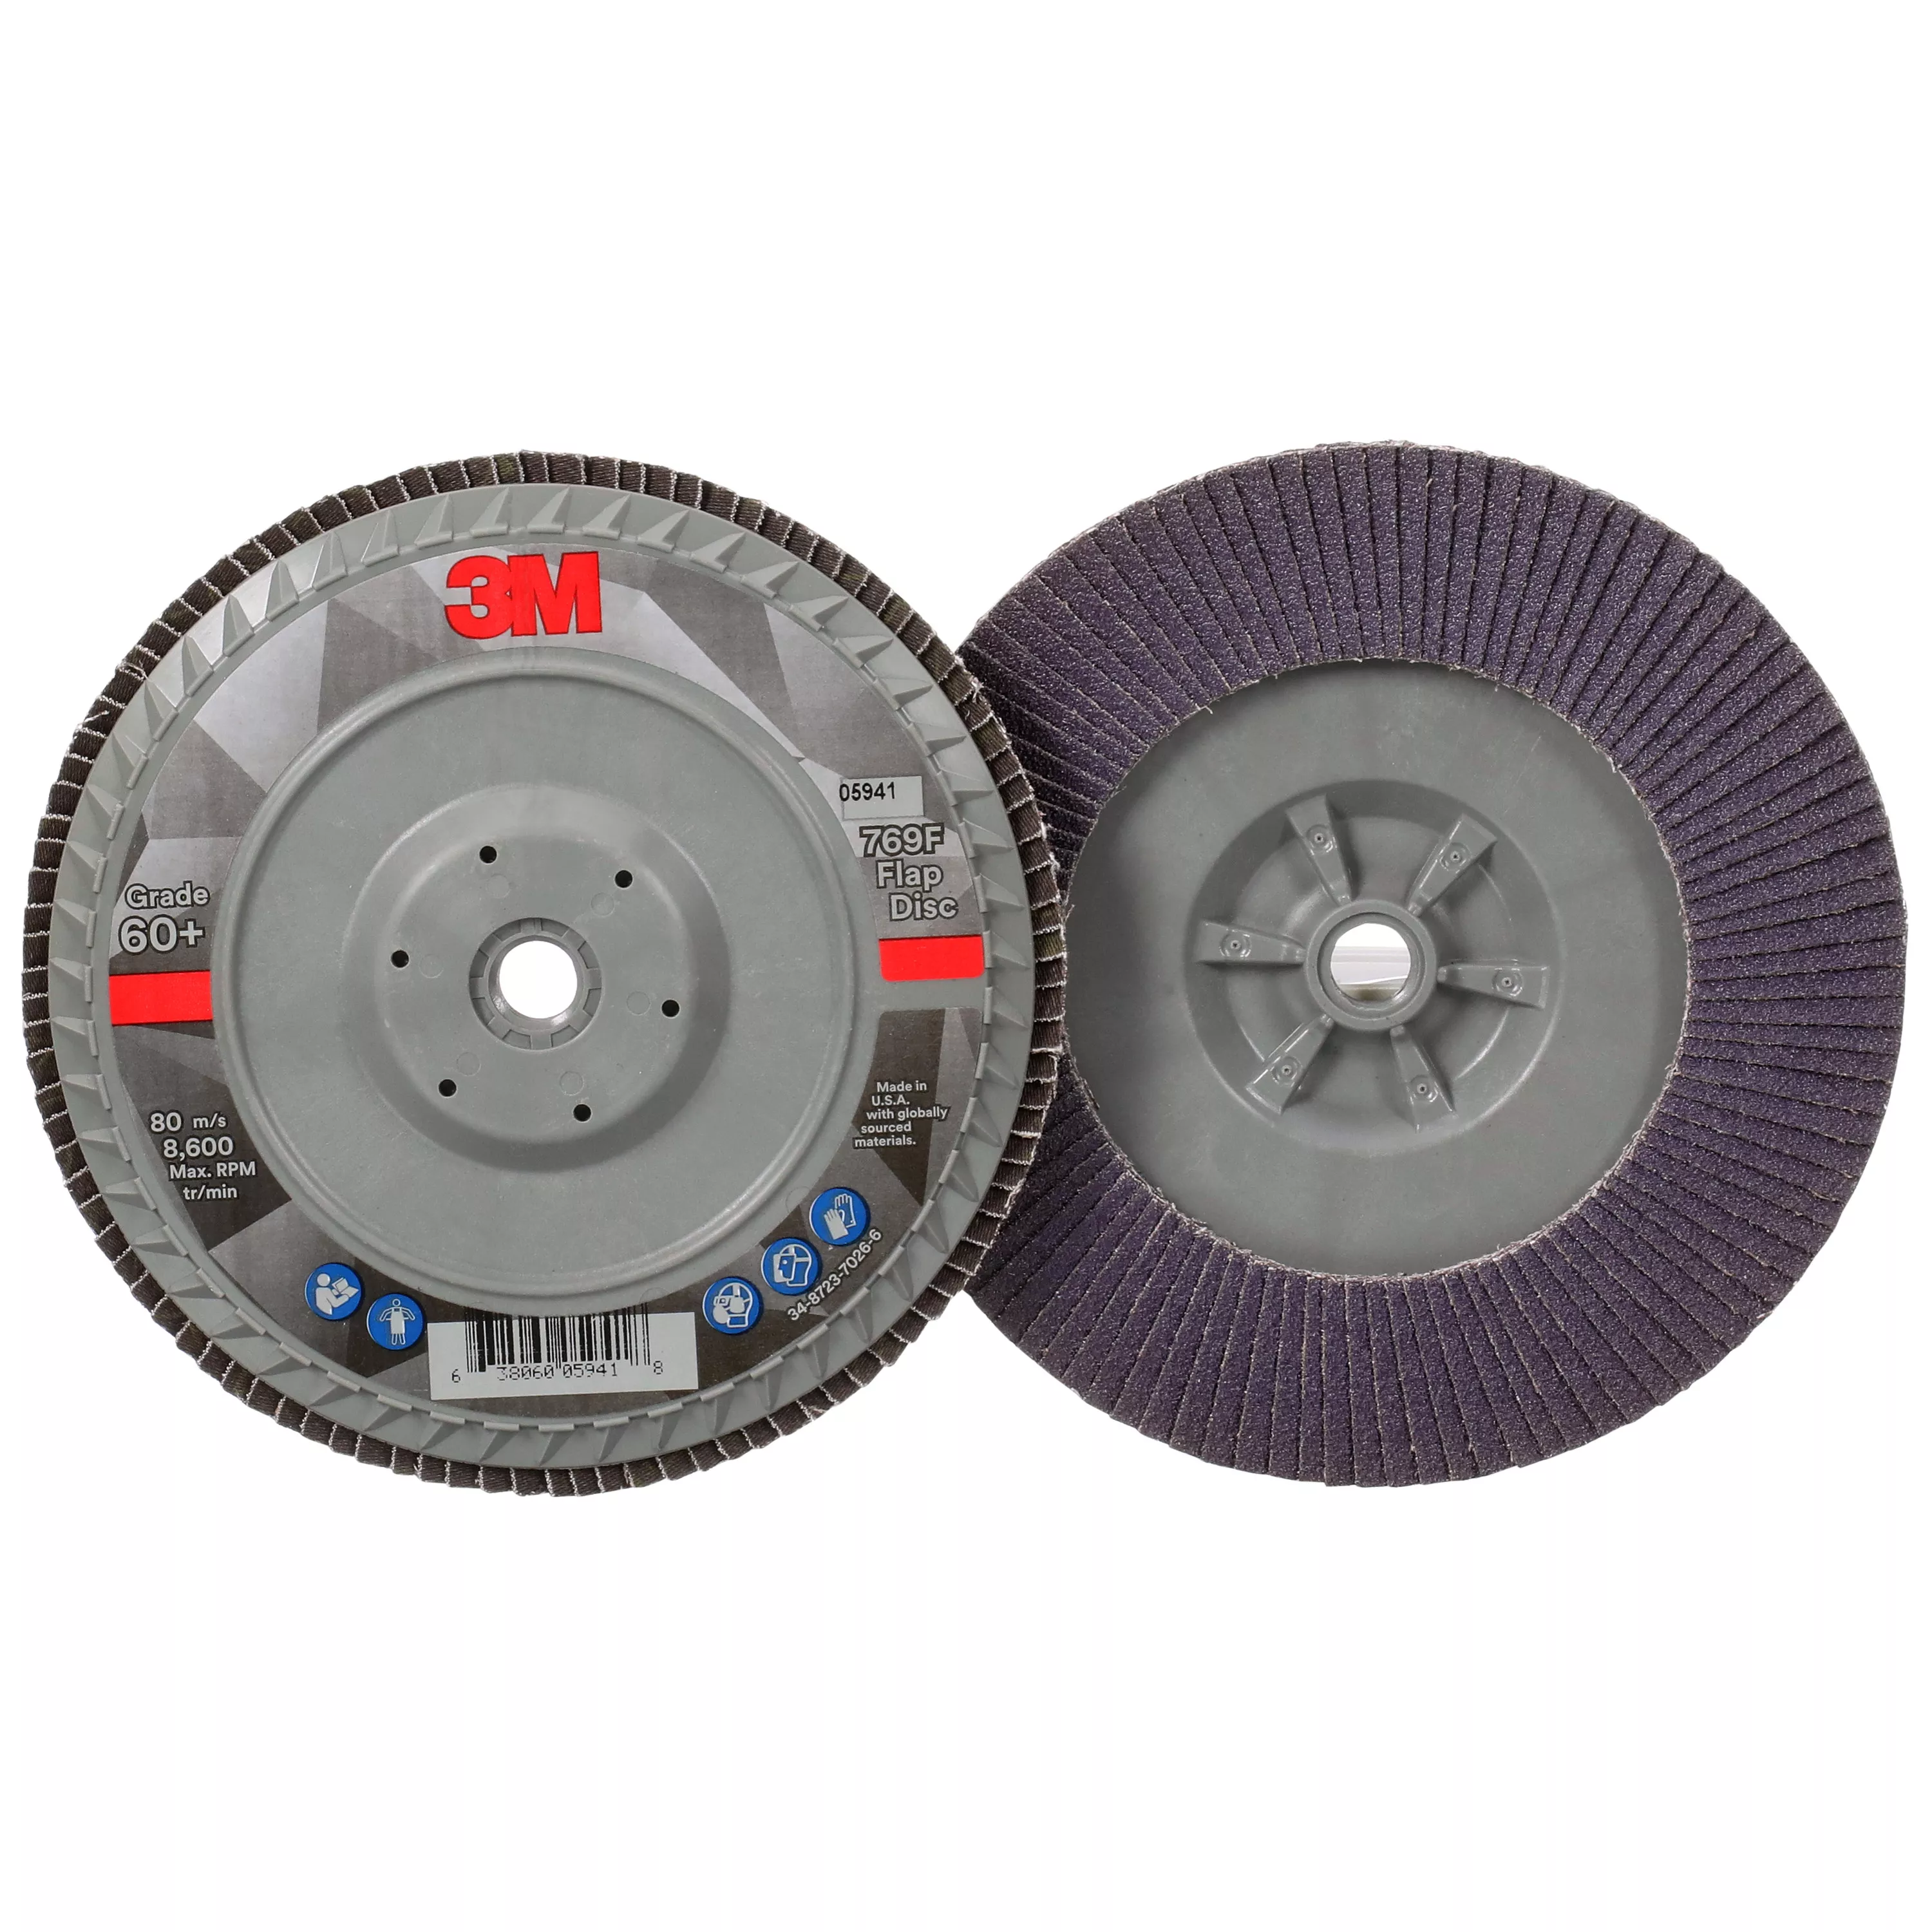 3M™ Flap Disc 769F, 60+, T27 Quick Change, 7 in x 5/8 in-11, 5 ea/Case